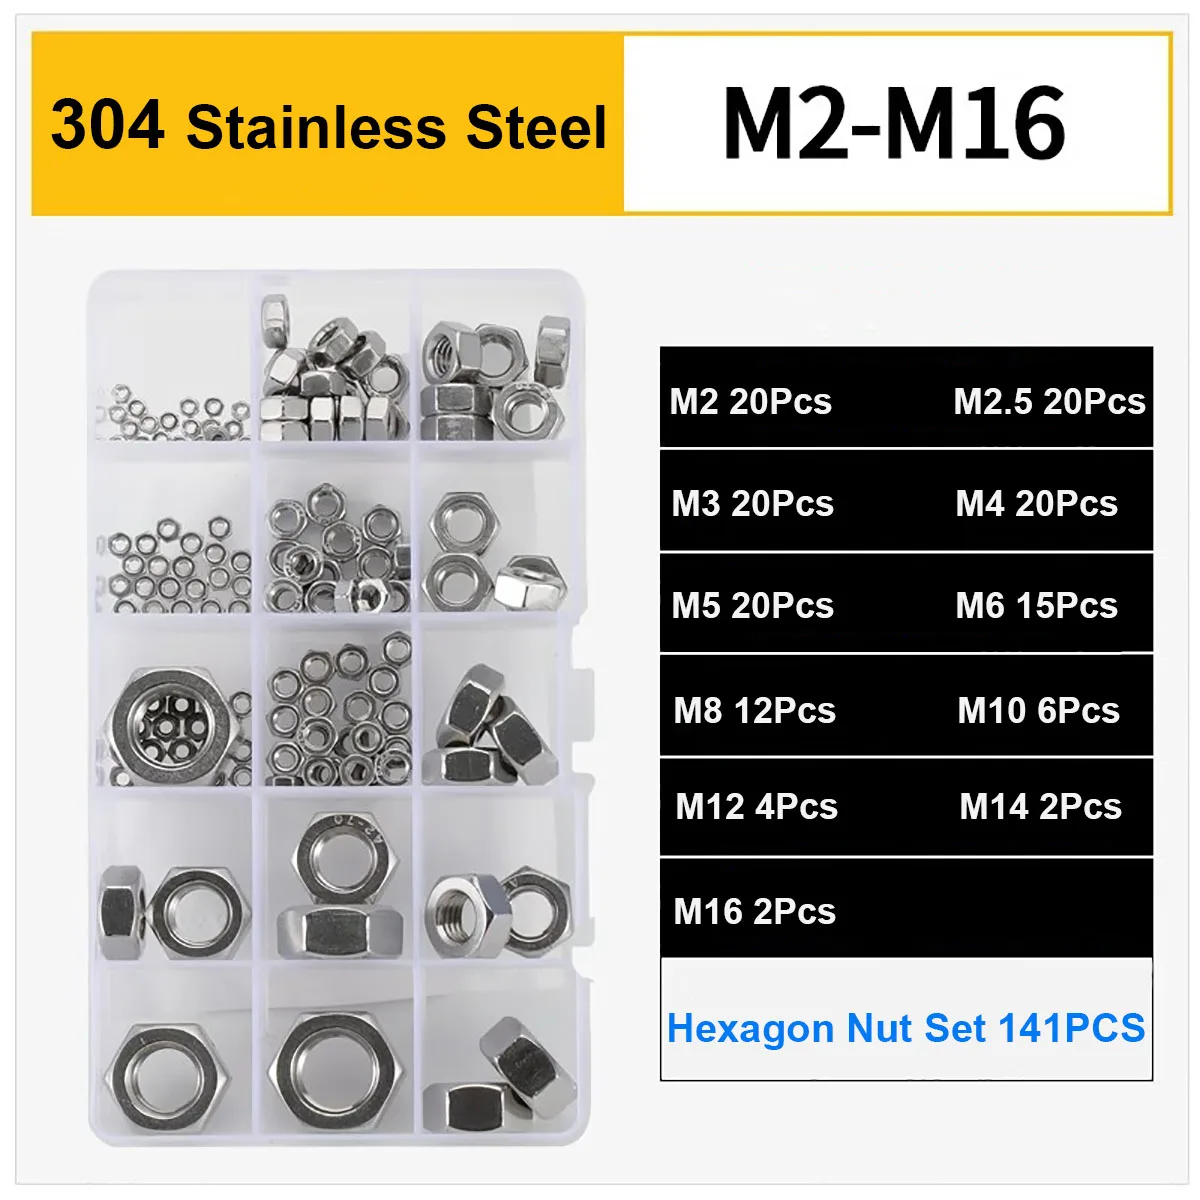 

141Pcs M2 M2.5 M3 M4 M5 M6 M8 M10 M12 M14 M16 201/304/316 Stainless Steel DIN934 Hex Hexagon Nut Set Assortment Kit